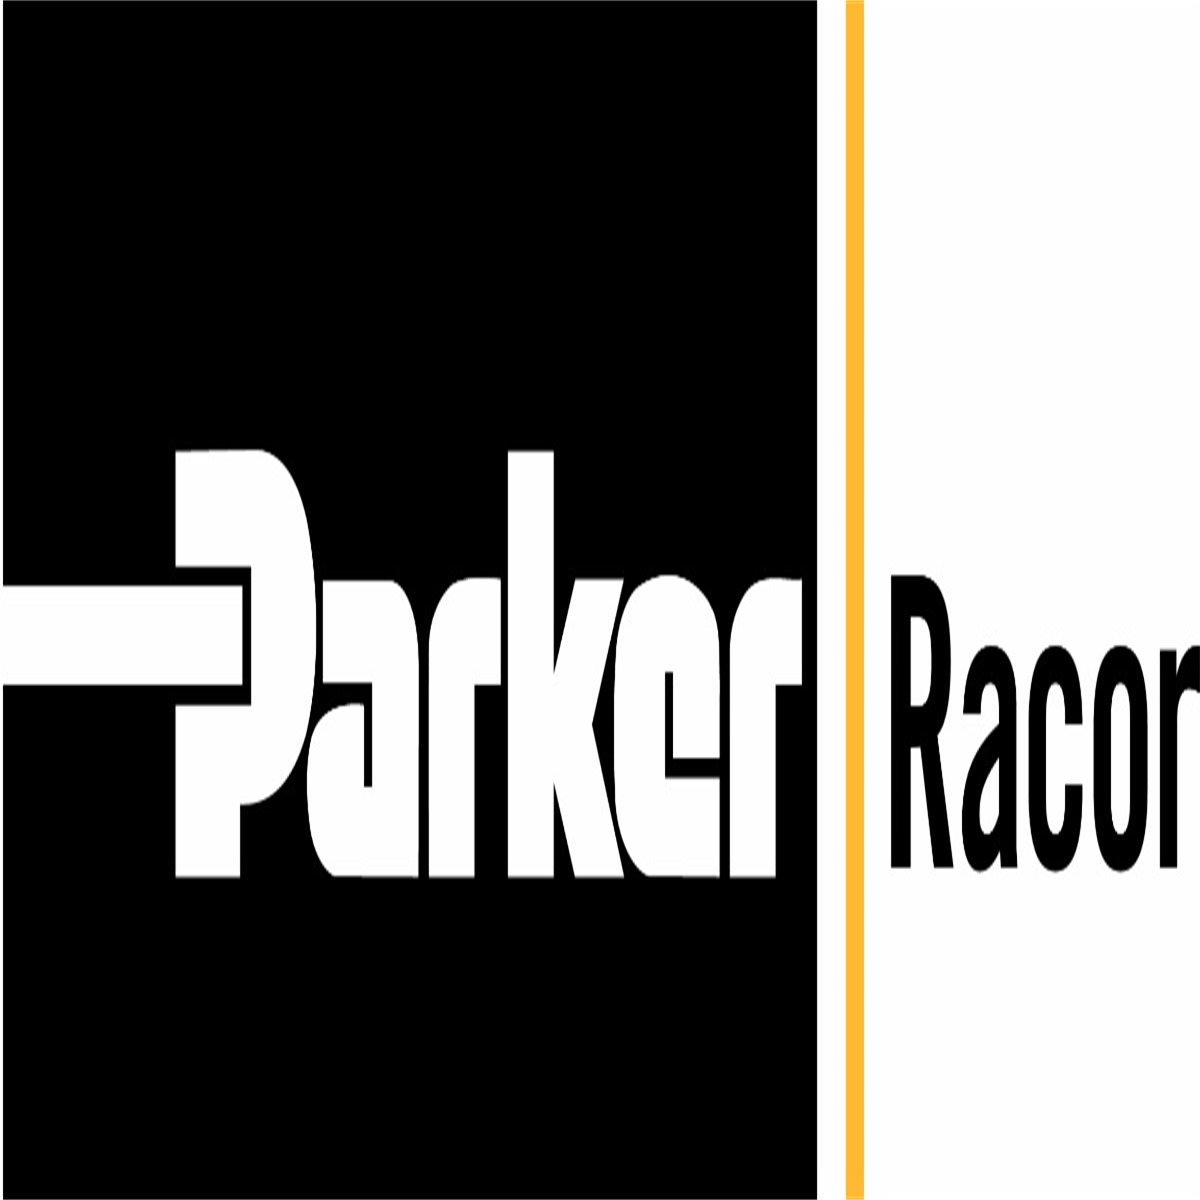 7  Parker Racor  Thumbnail0